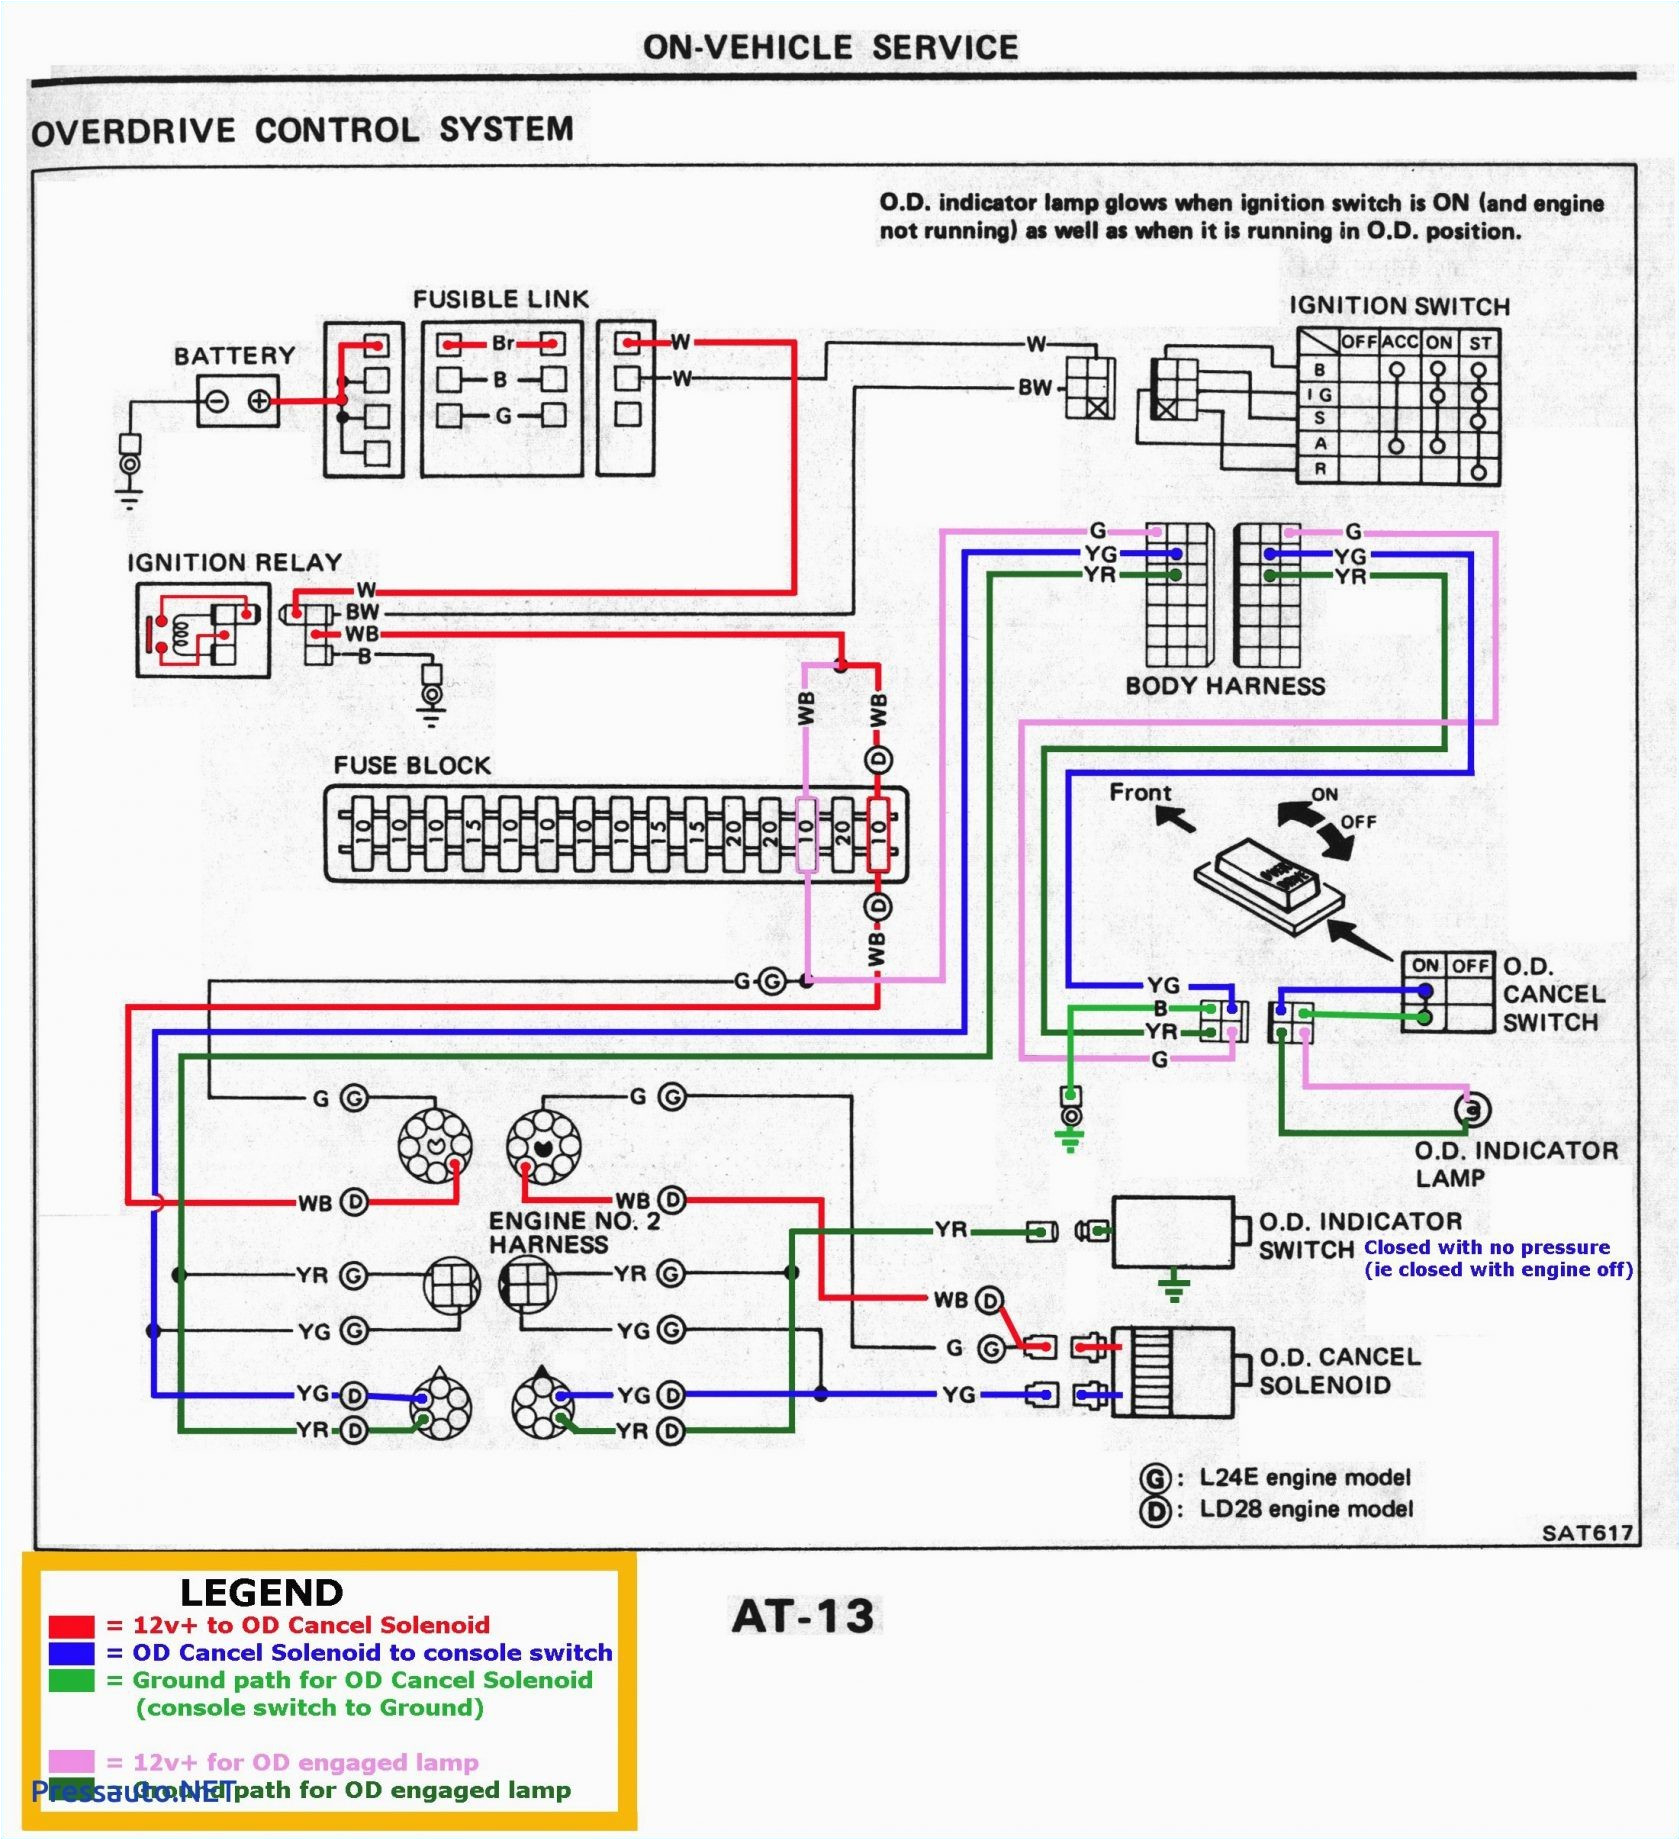 7 pin wiring harness diagram free download wiring diagram go way trailer light harness diagram free download wiring diagram